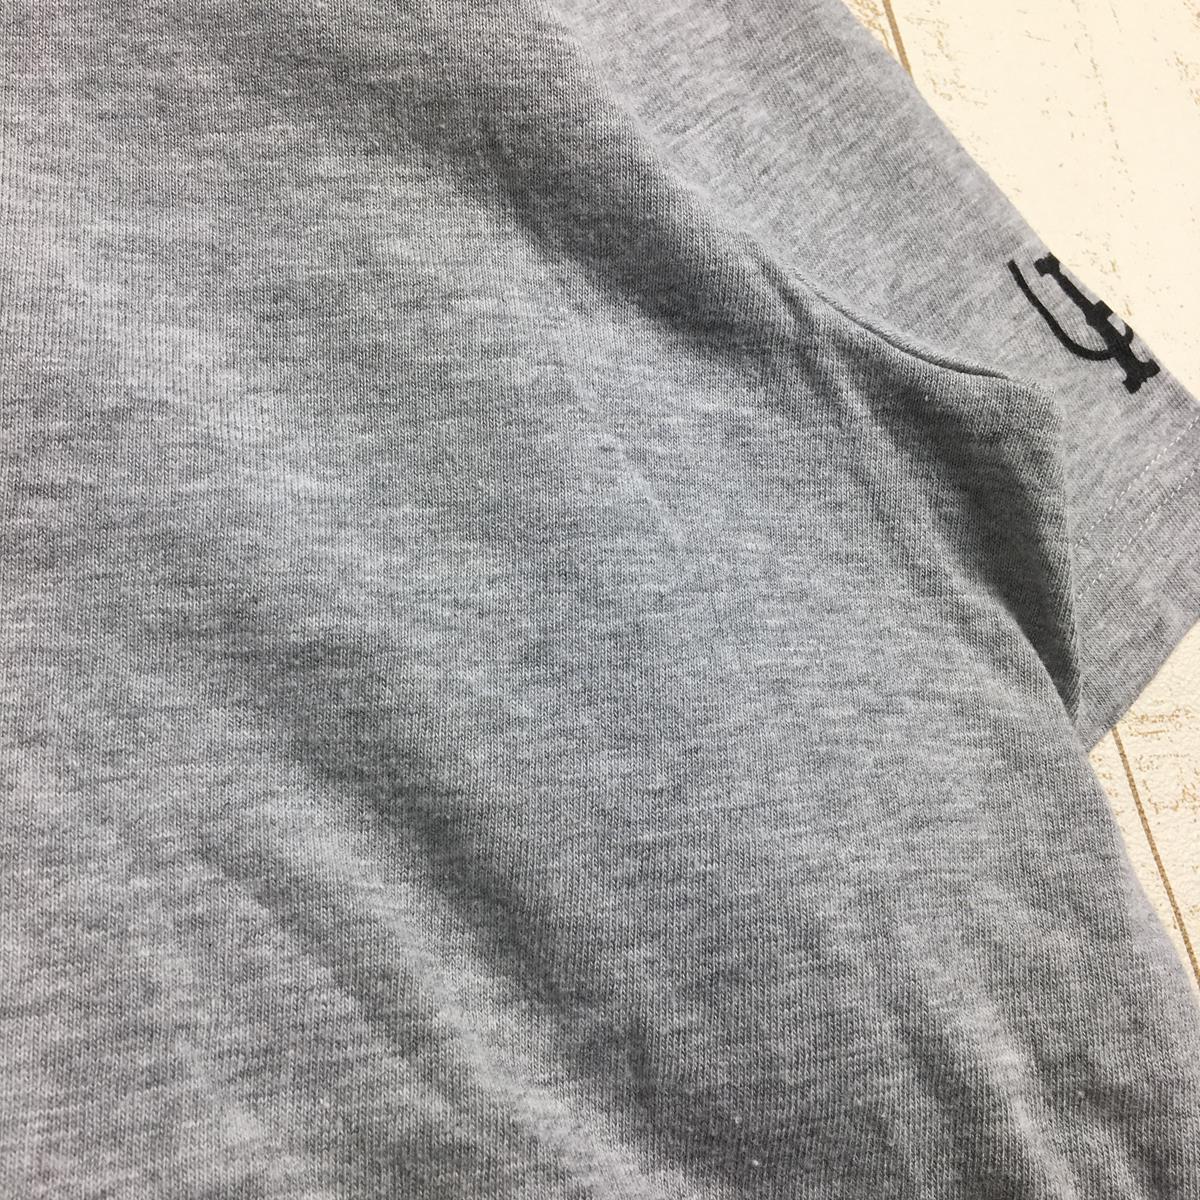 【MEN's XL】 ウルトラヘビー 6.2オンス プレミアム Tシャツ ULTRAHEAVY 6.2oz Premium T-Shirt コットン 生産終了モデル 入手困難 グレー系